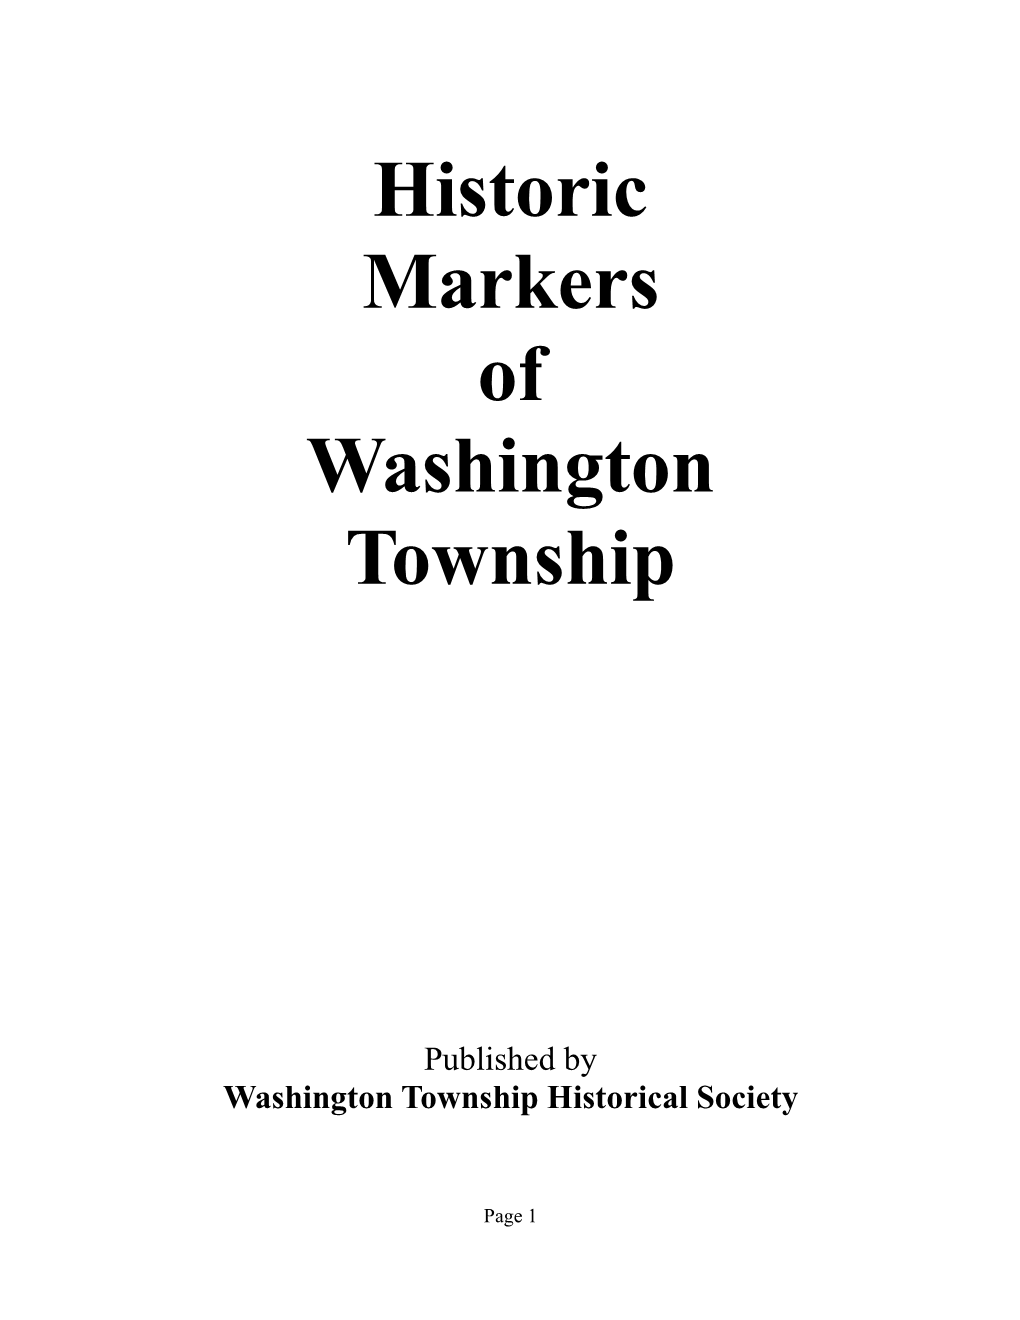 Historic Markers of Washington Township